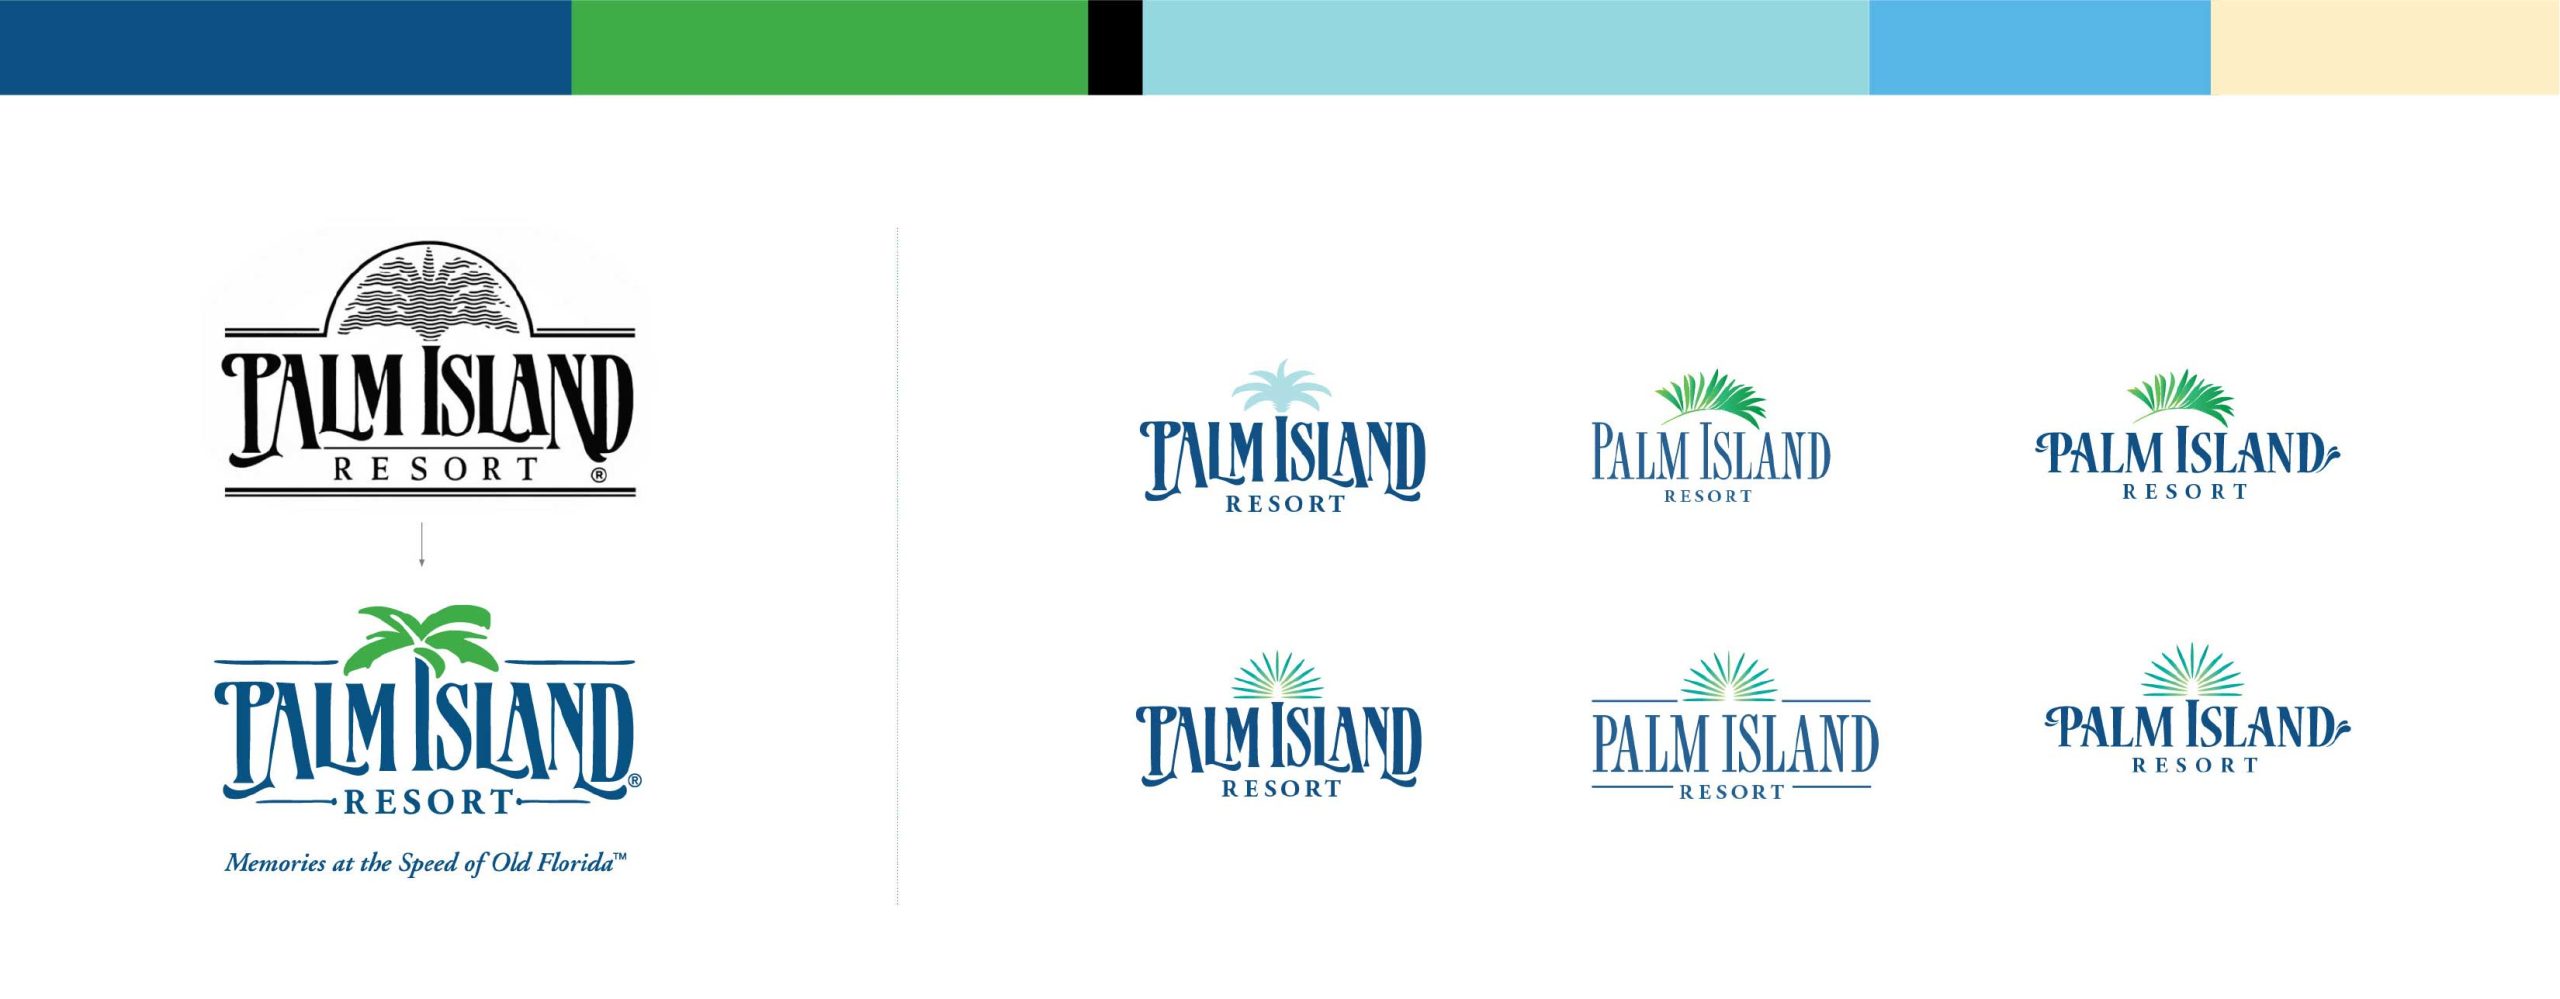 Palm Island Resort Portfolio - Advertising & Branding Agency Naples, Florida